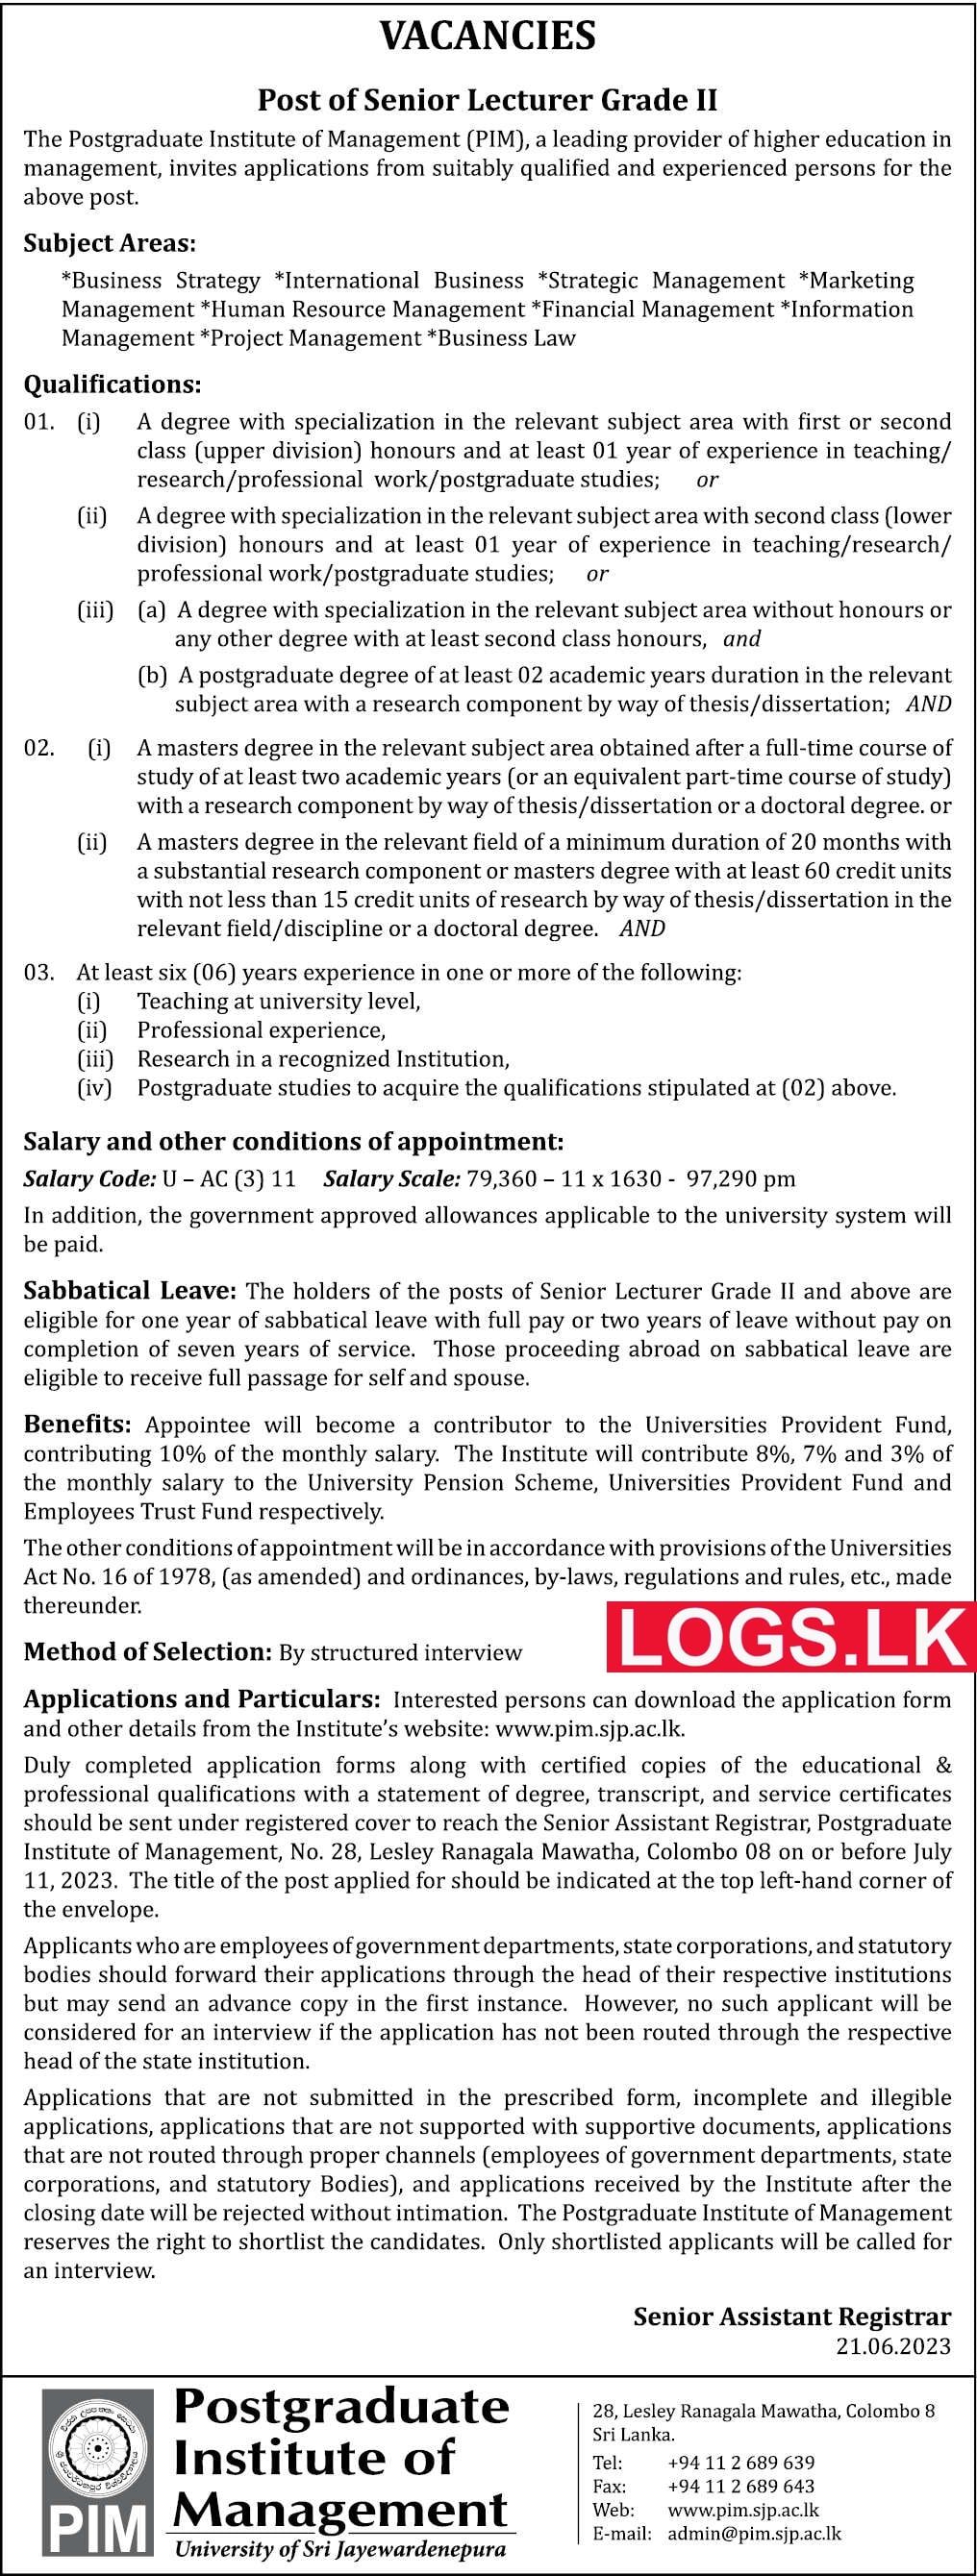 Senior Lecturer (PIM) - University of Sri Jayewardenepura Vacancies 2023 Application Form, Details Download